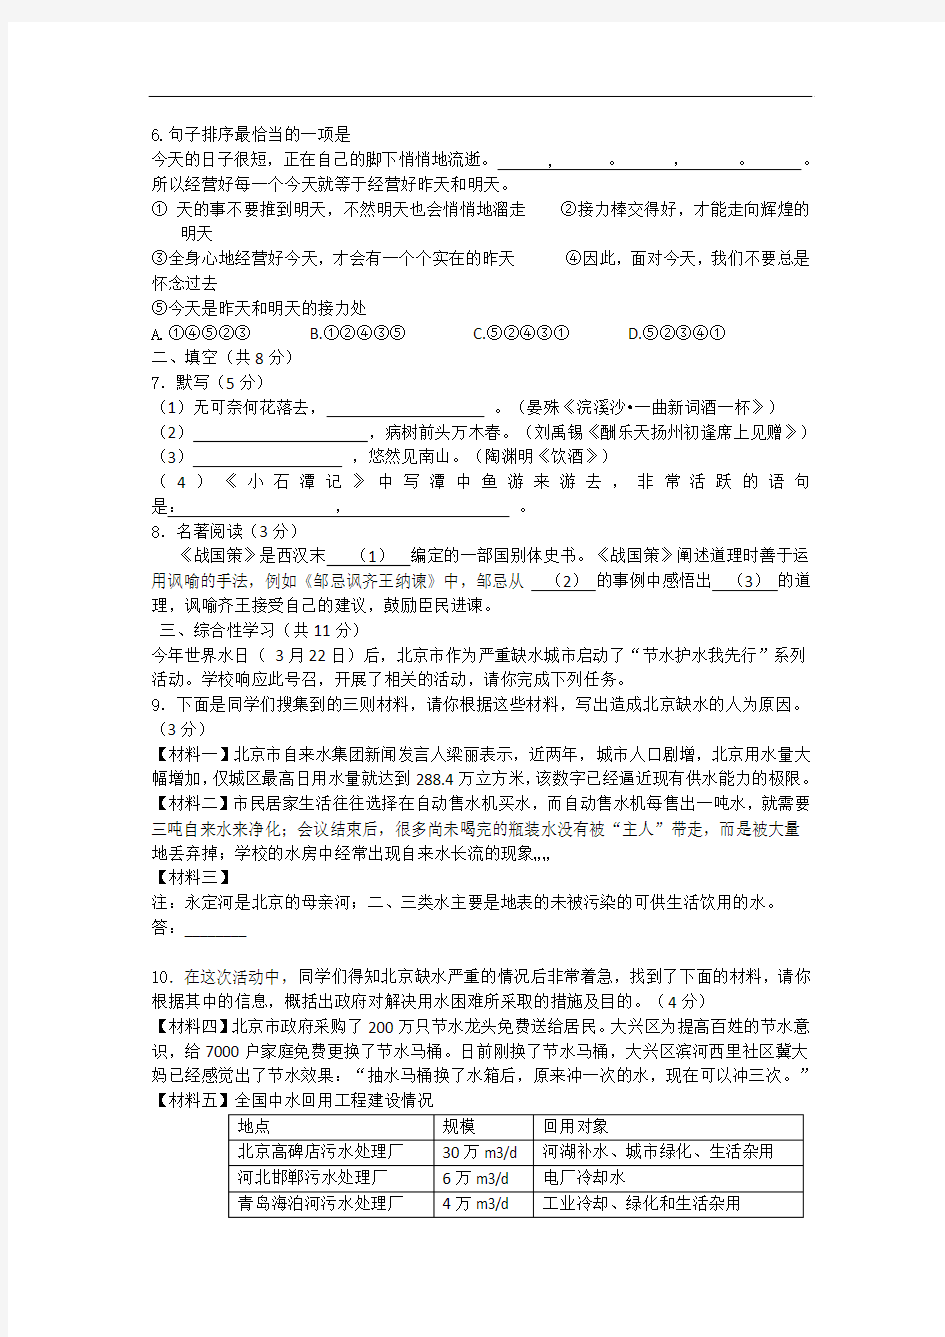 WORD 清晰版2012年北京石景山区中考二模语文试卷及答案(2)